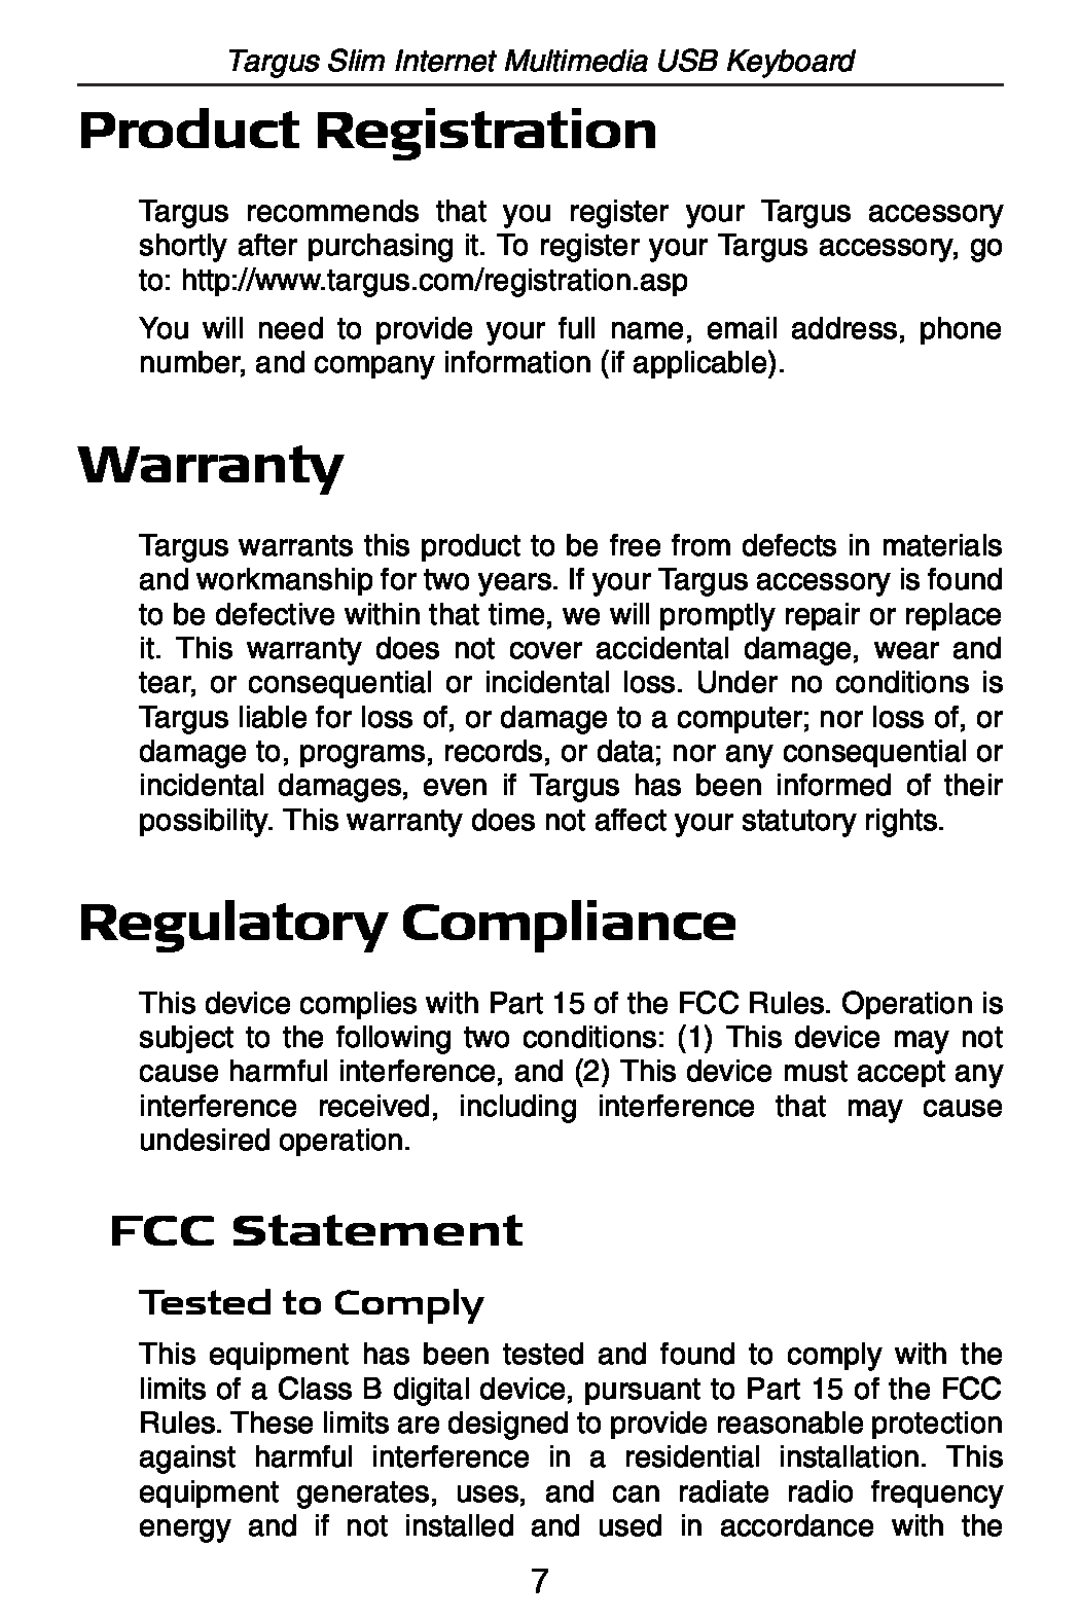 Targus slim internet multimedia USB keyboard Product Registration, Warranty, Regulatory Compliance, FCC Statement 